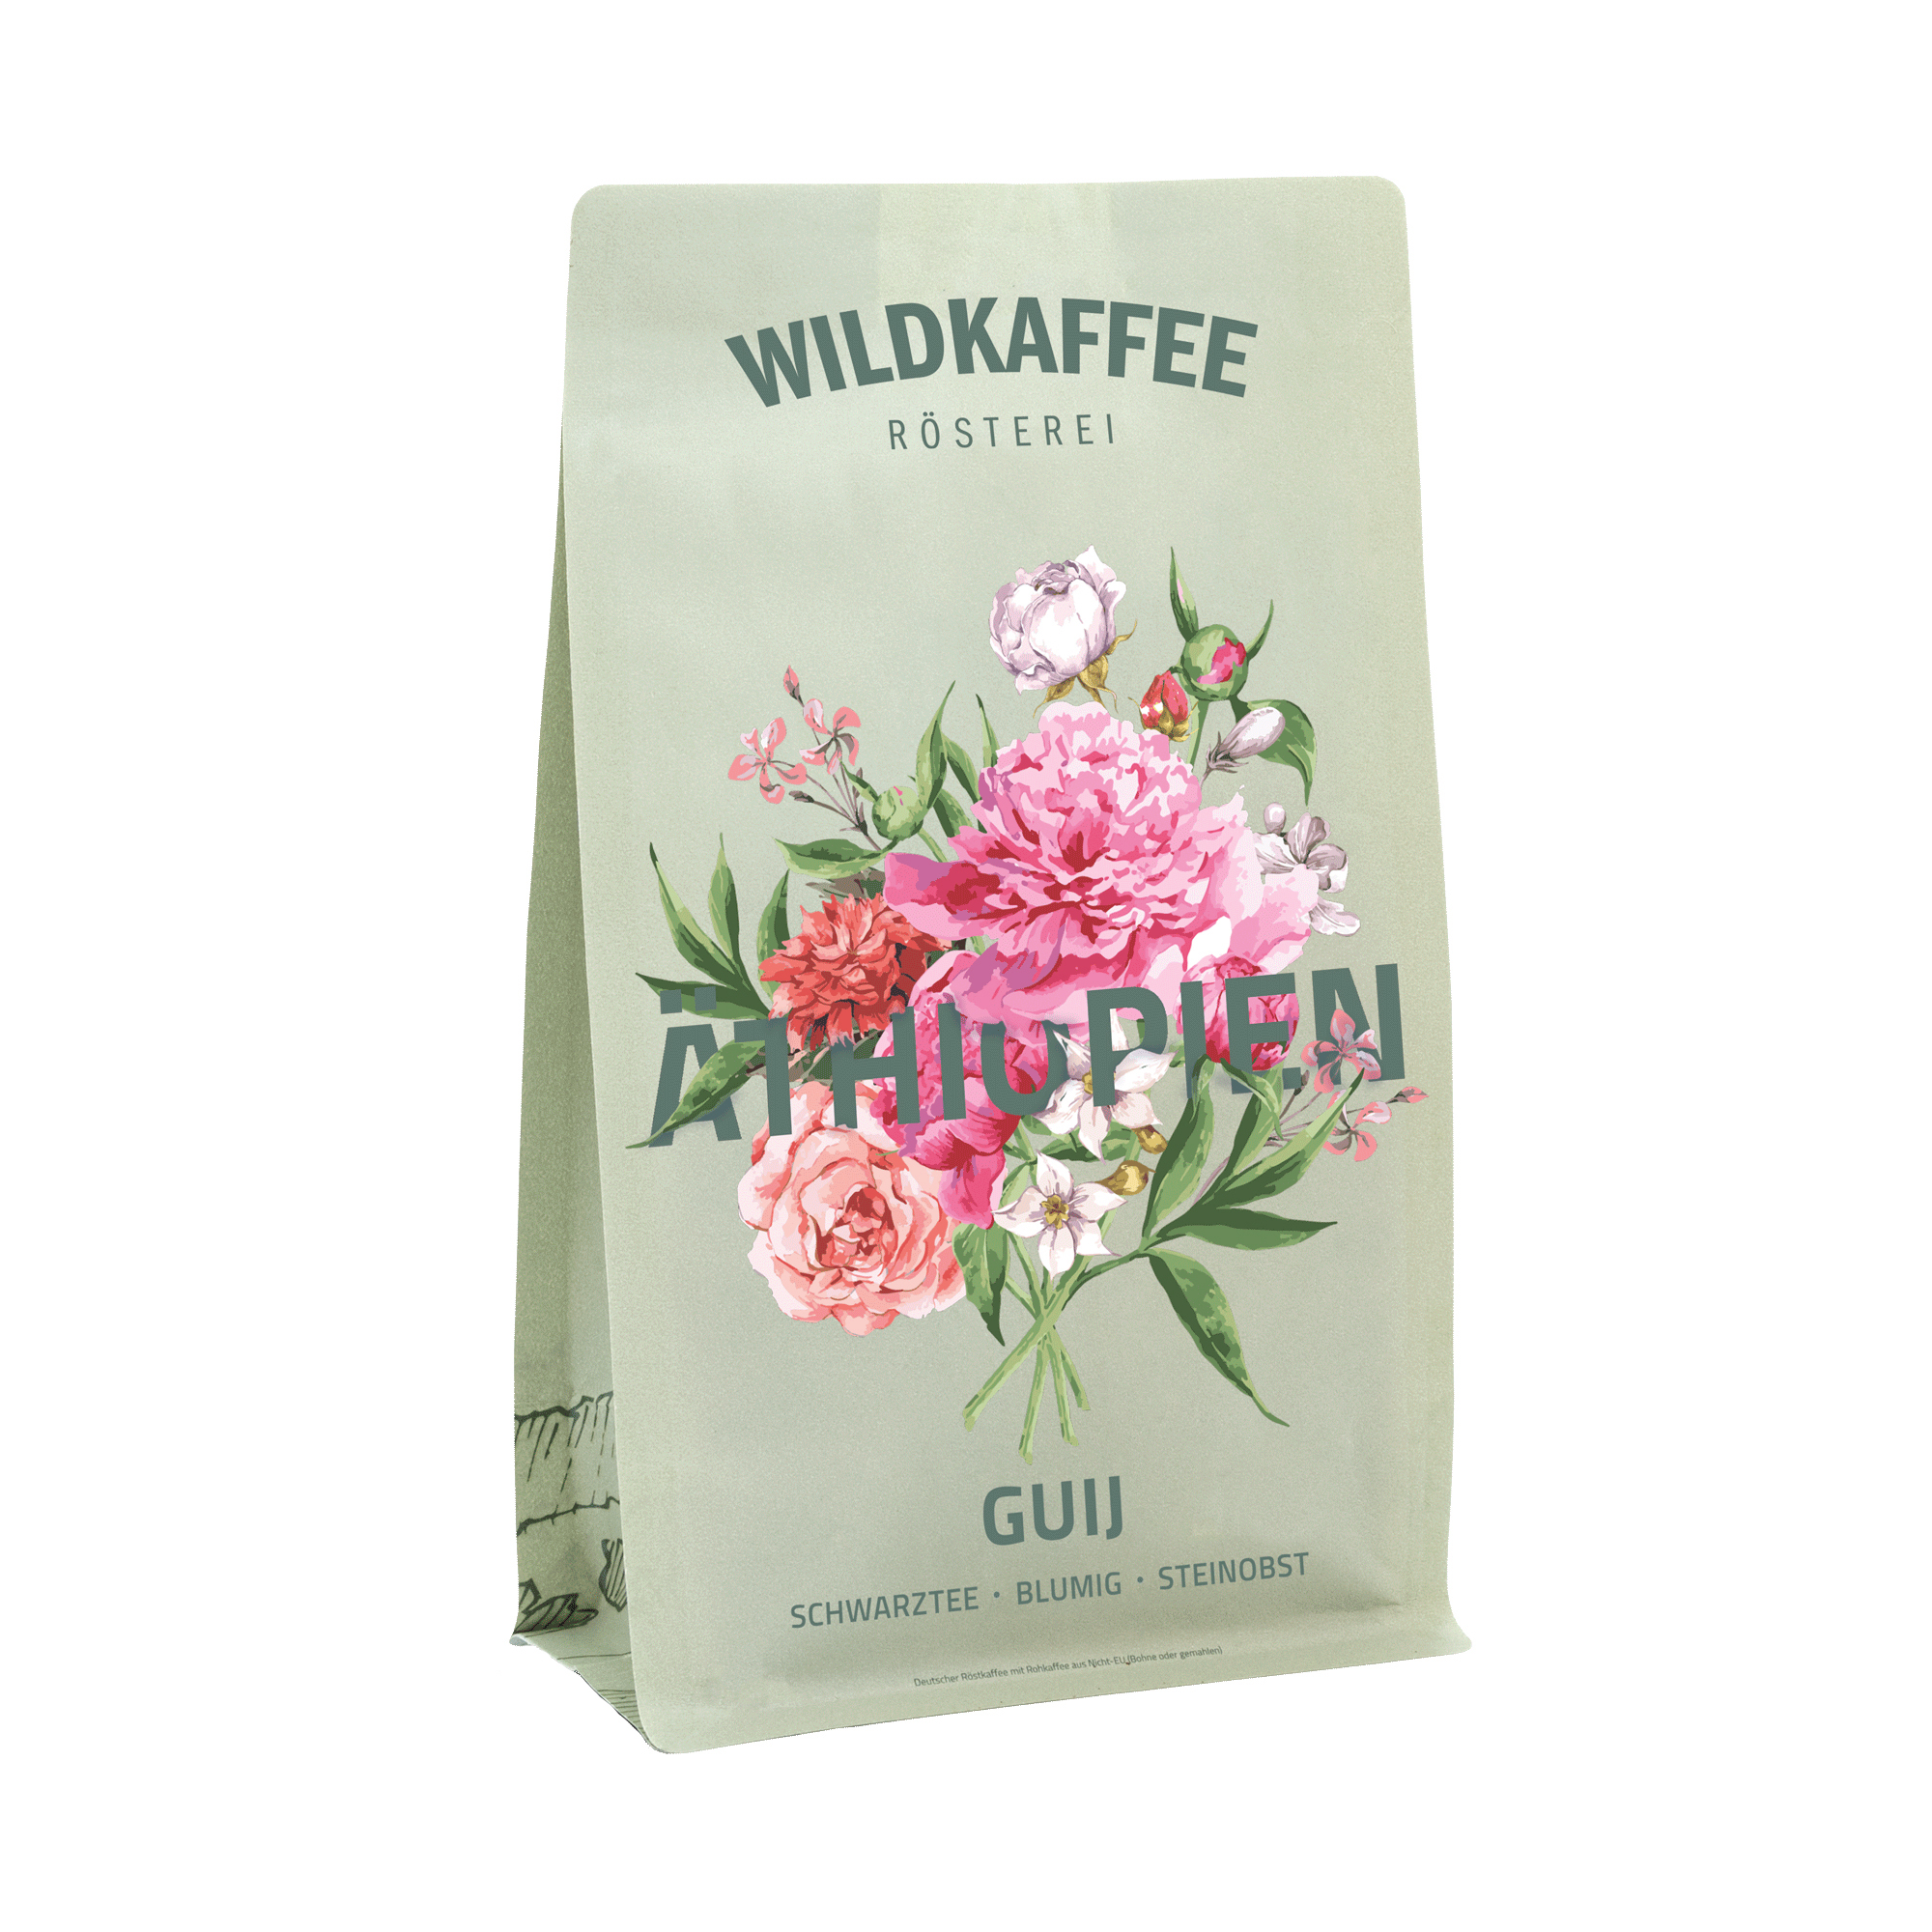 Wildkaffee Äthiopien Guji